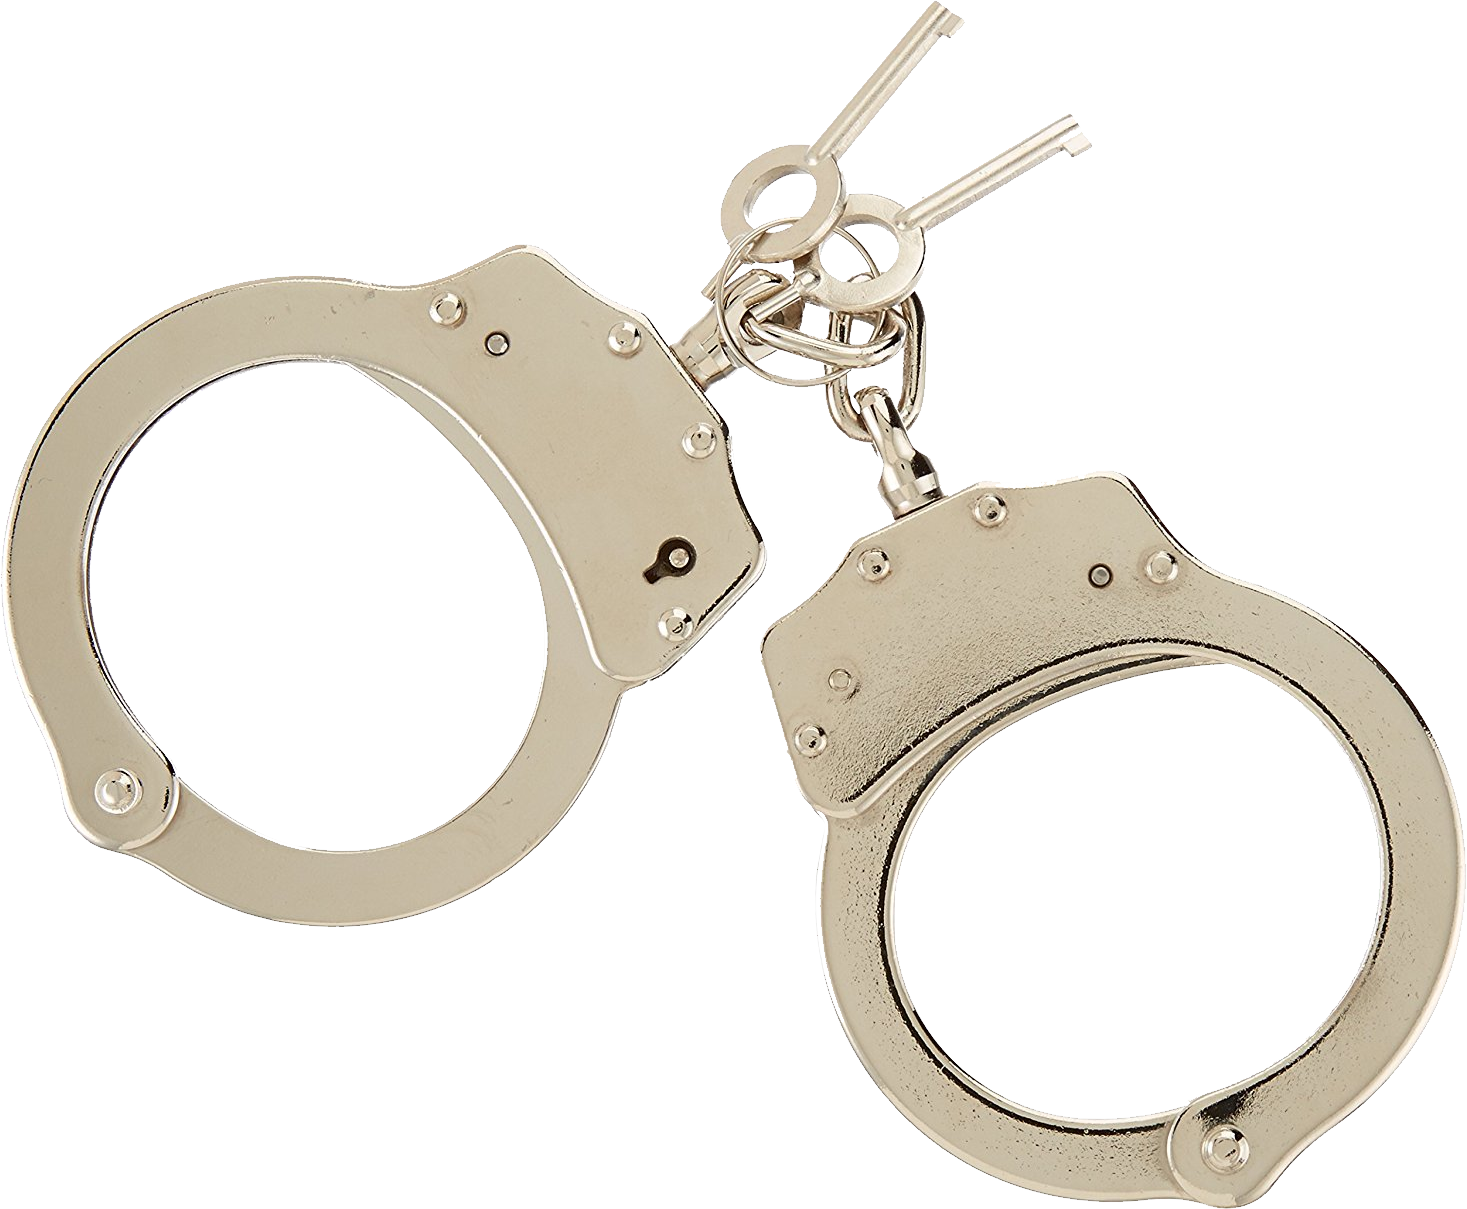 Golden Handcuffs PNG Image